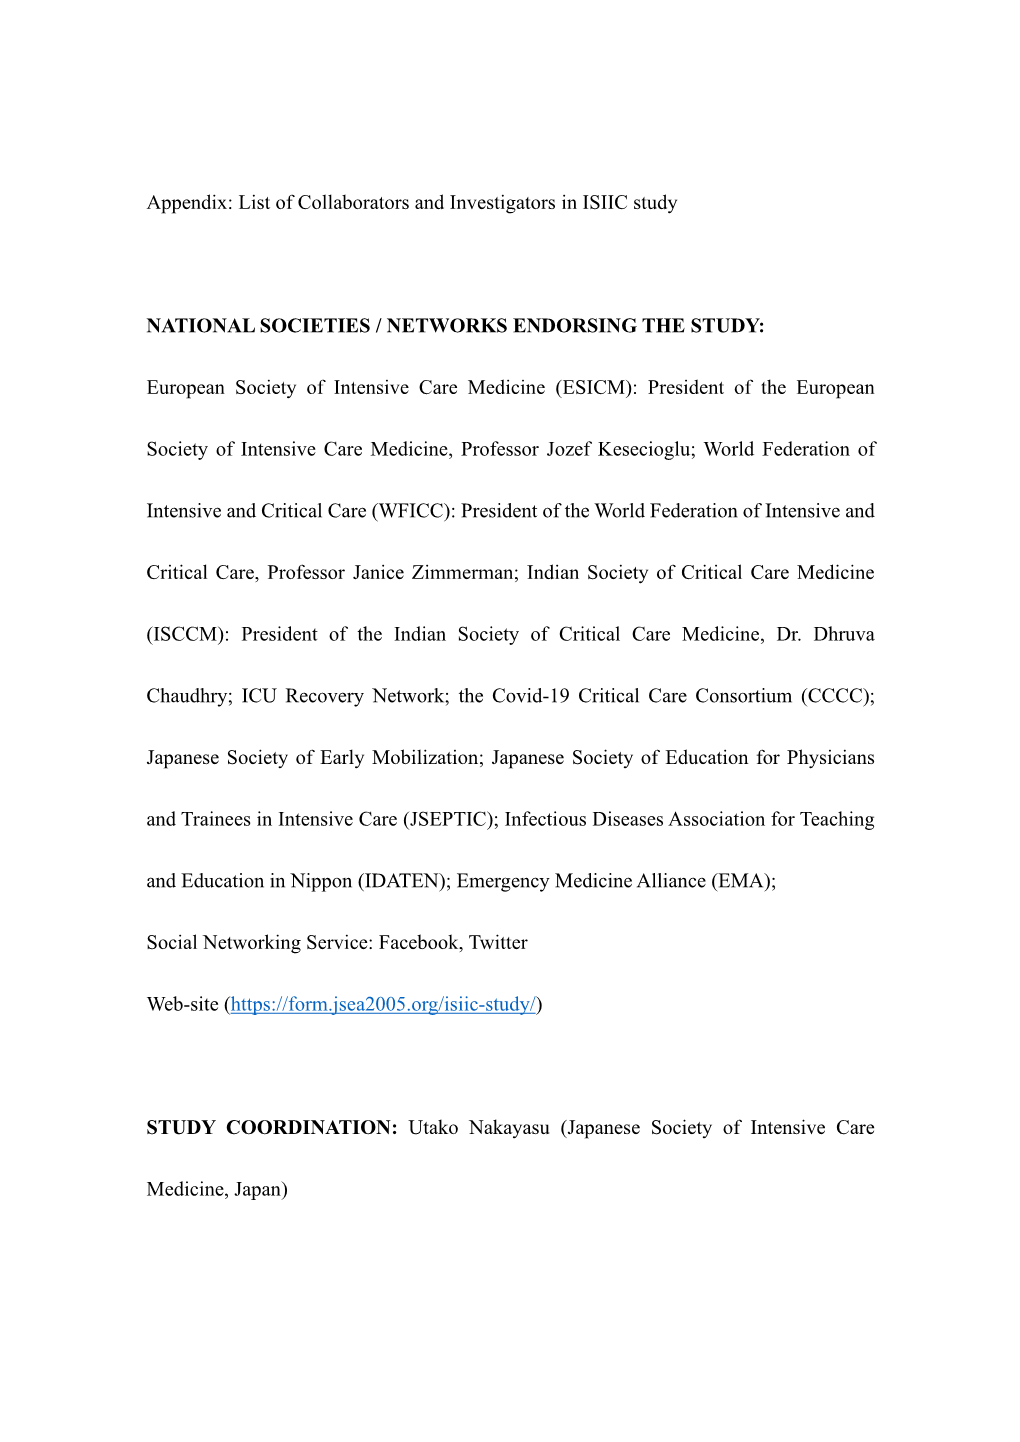 Appendix: List of Collaborators and Investigators in ISIIC Study